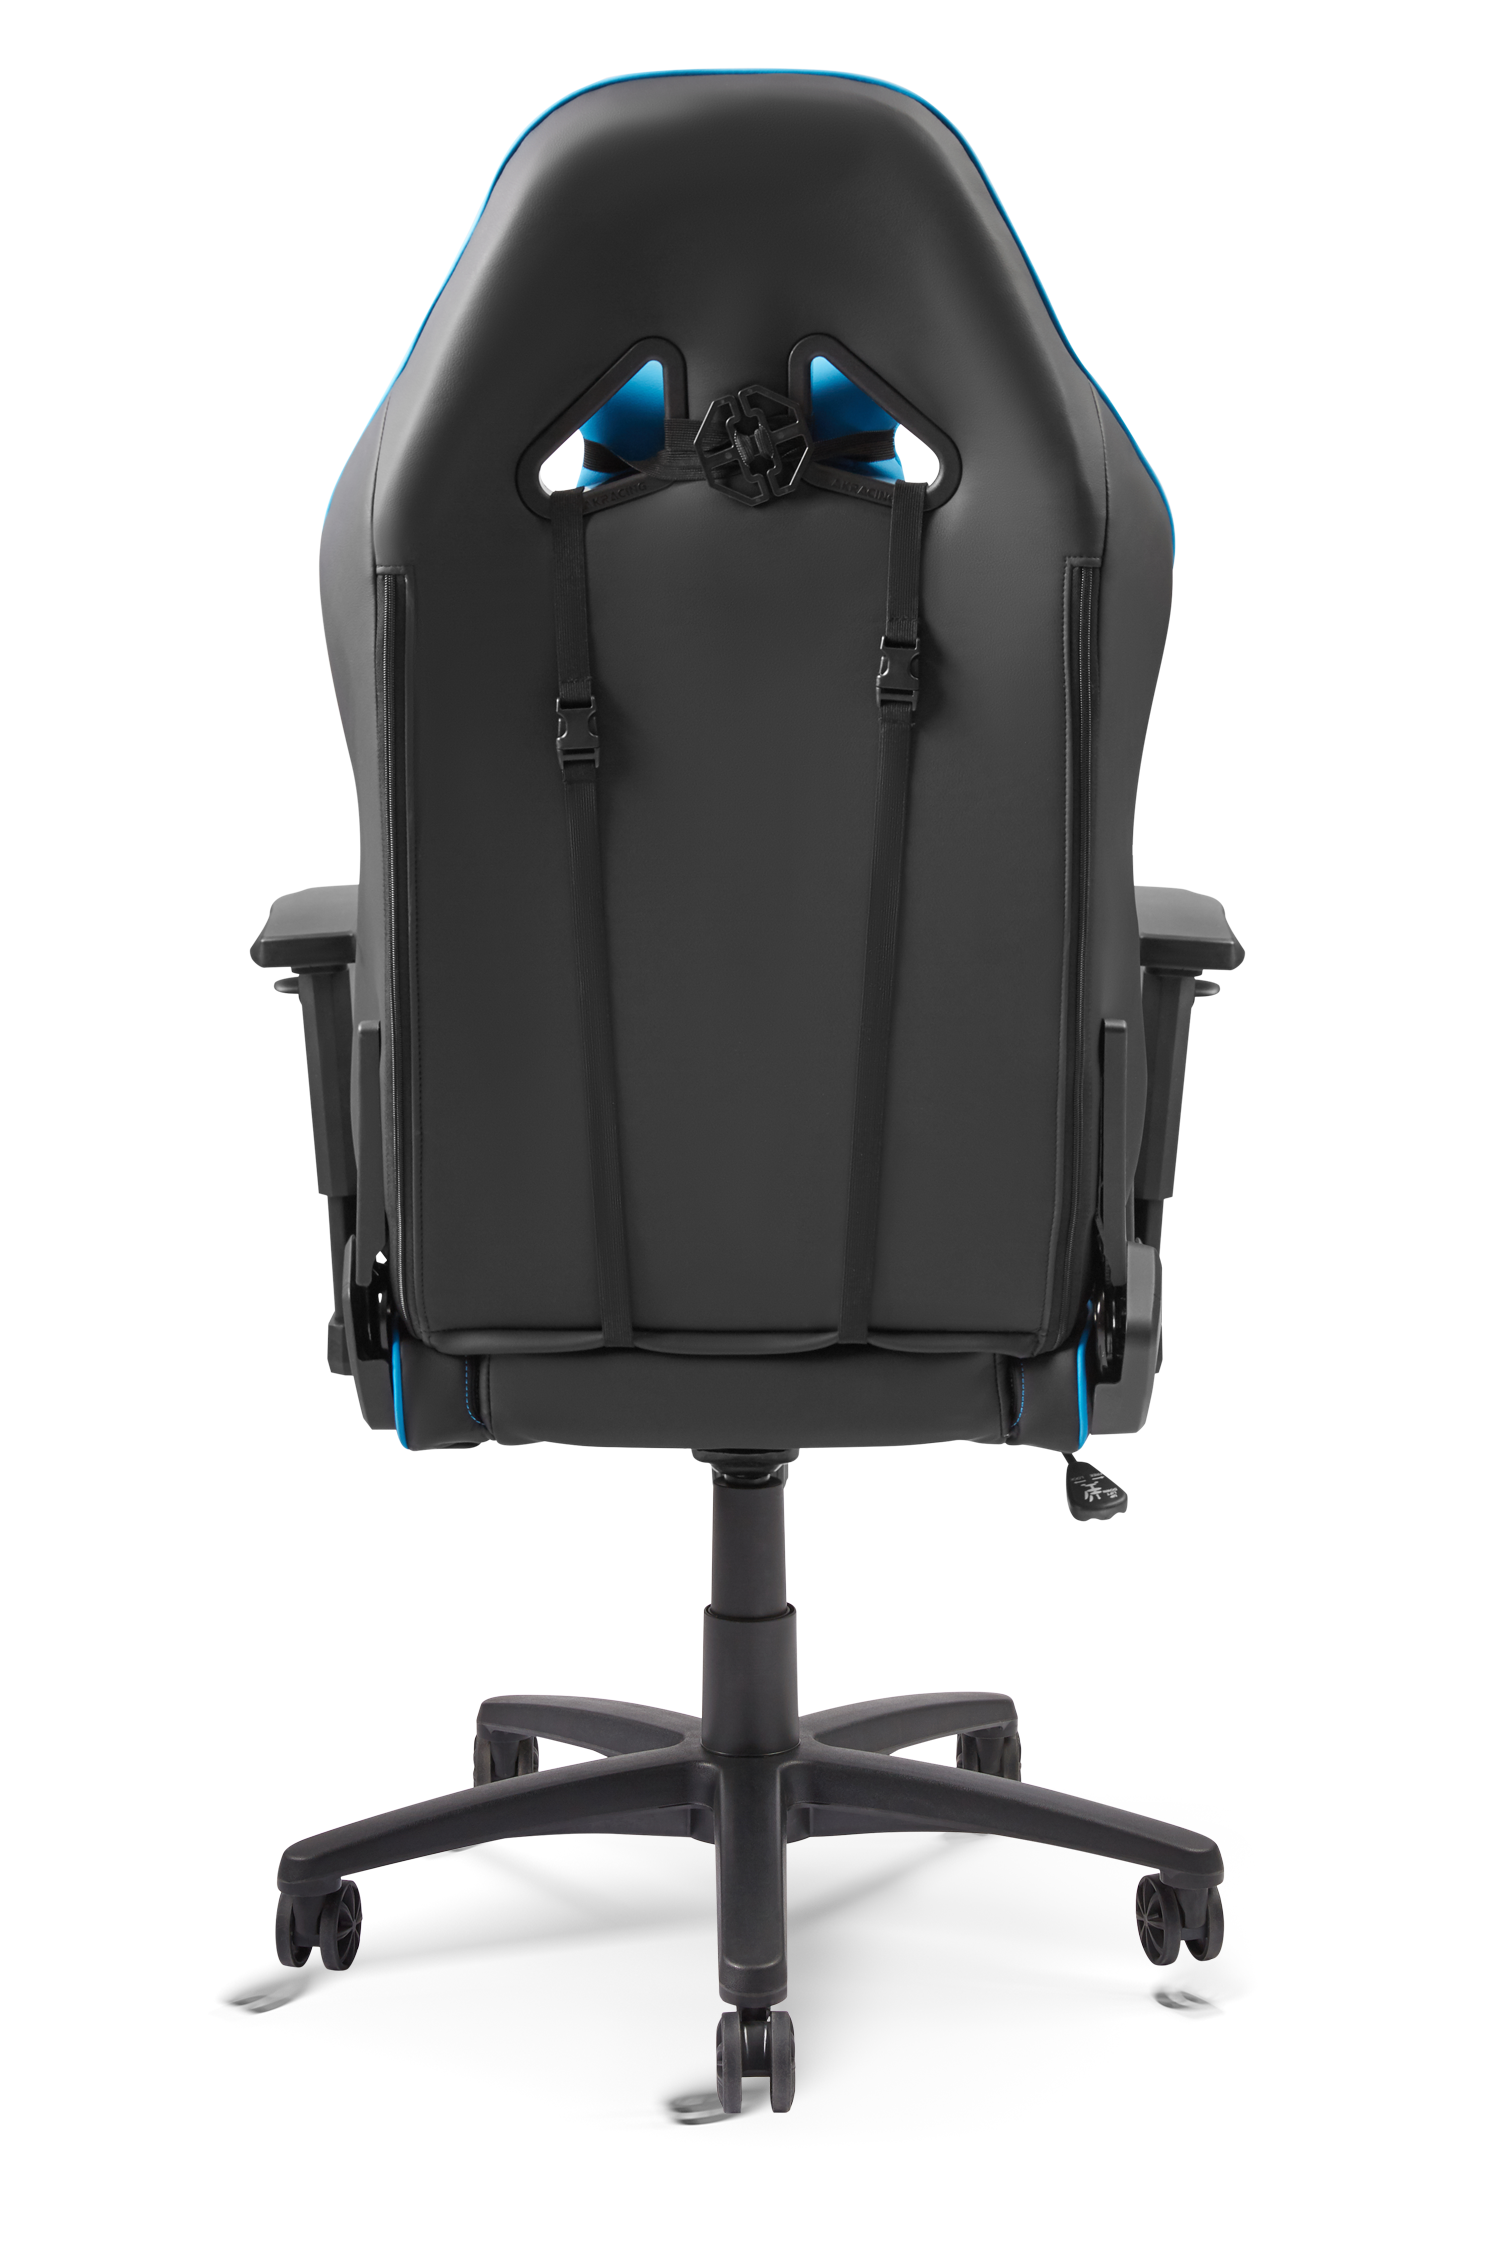 AKRACING Core SX schwarz/blau blue Gaming-Stuhl, black